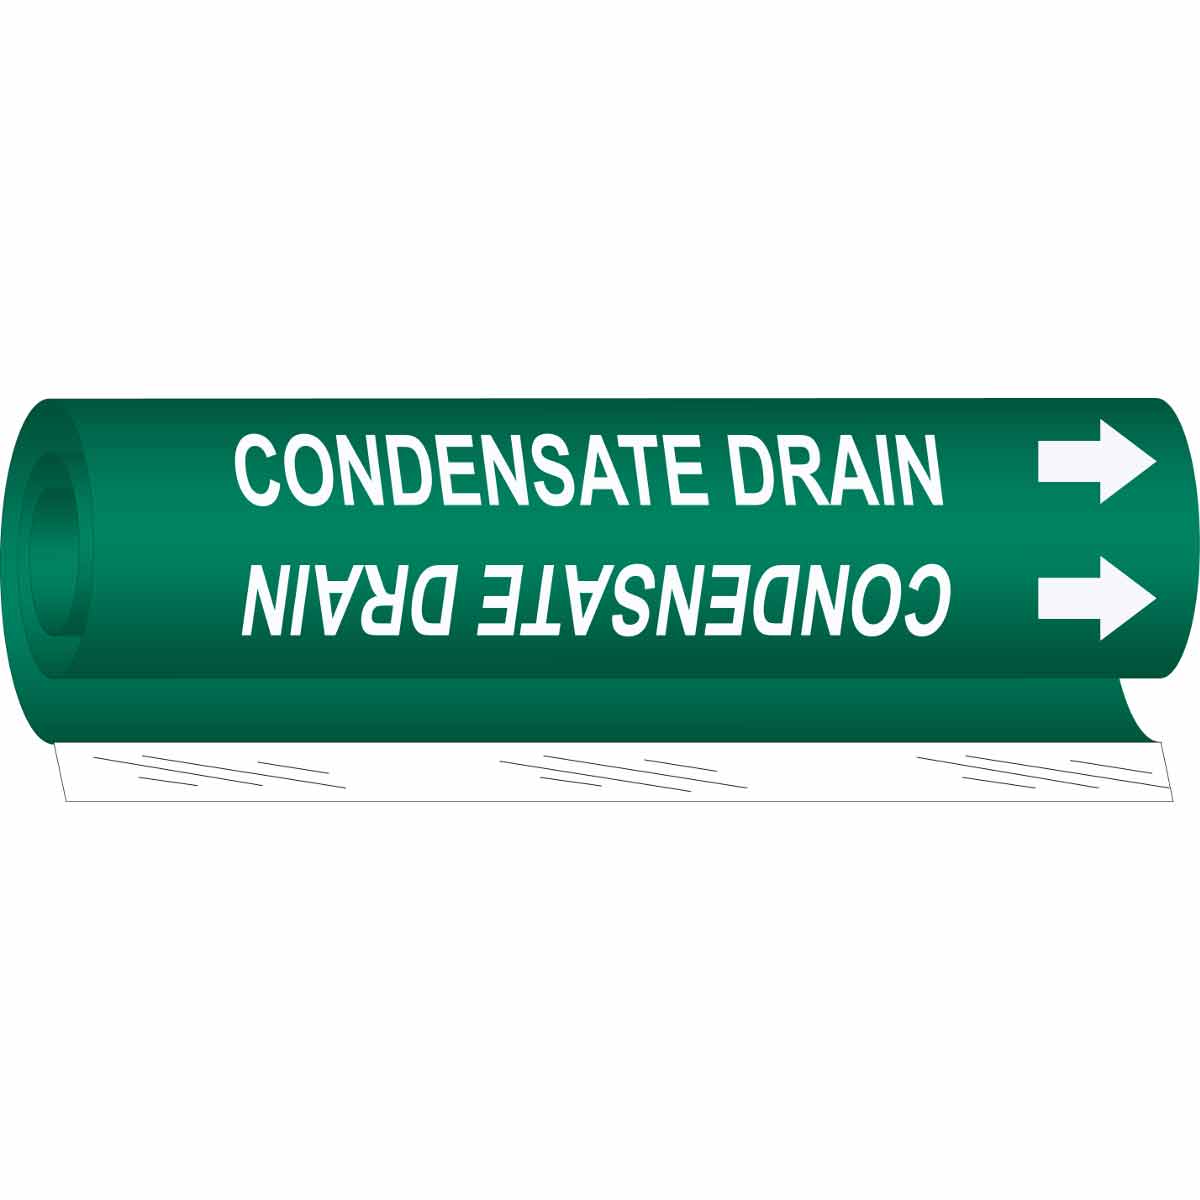 Brady Part: 7064-4-PK, 172197, Condensate Pump Discharge Pipe Marker